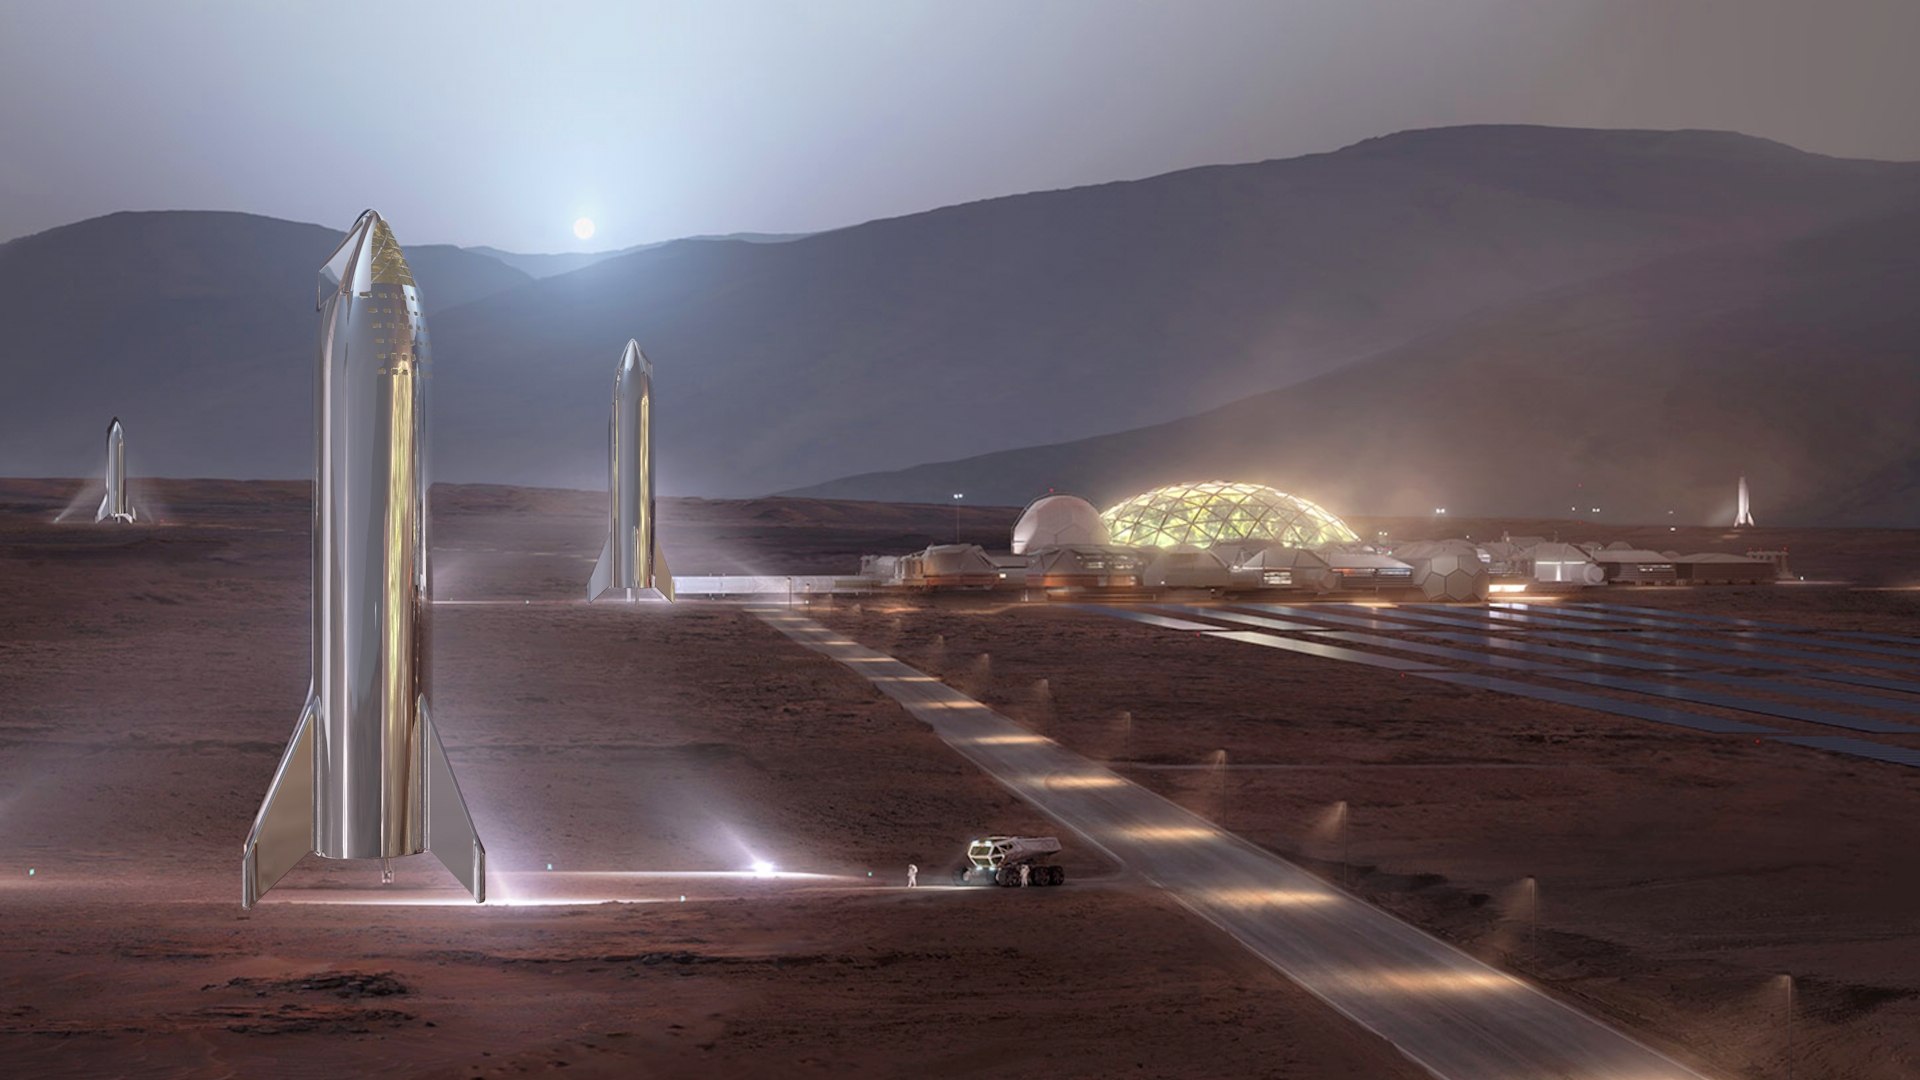 Spacex Stainless Steel Starships At Mars Base Alpha - Elon Musk Starships On Mars - HD Wallpaper 